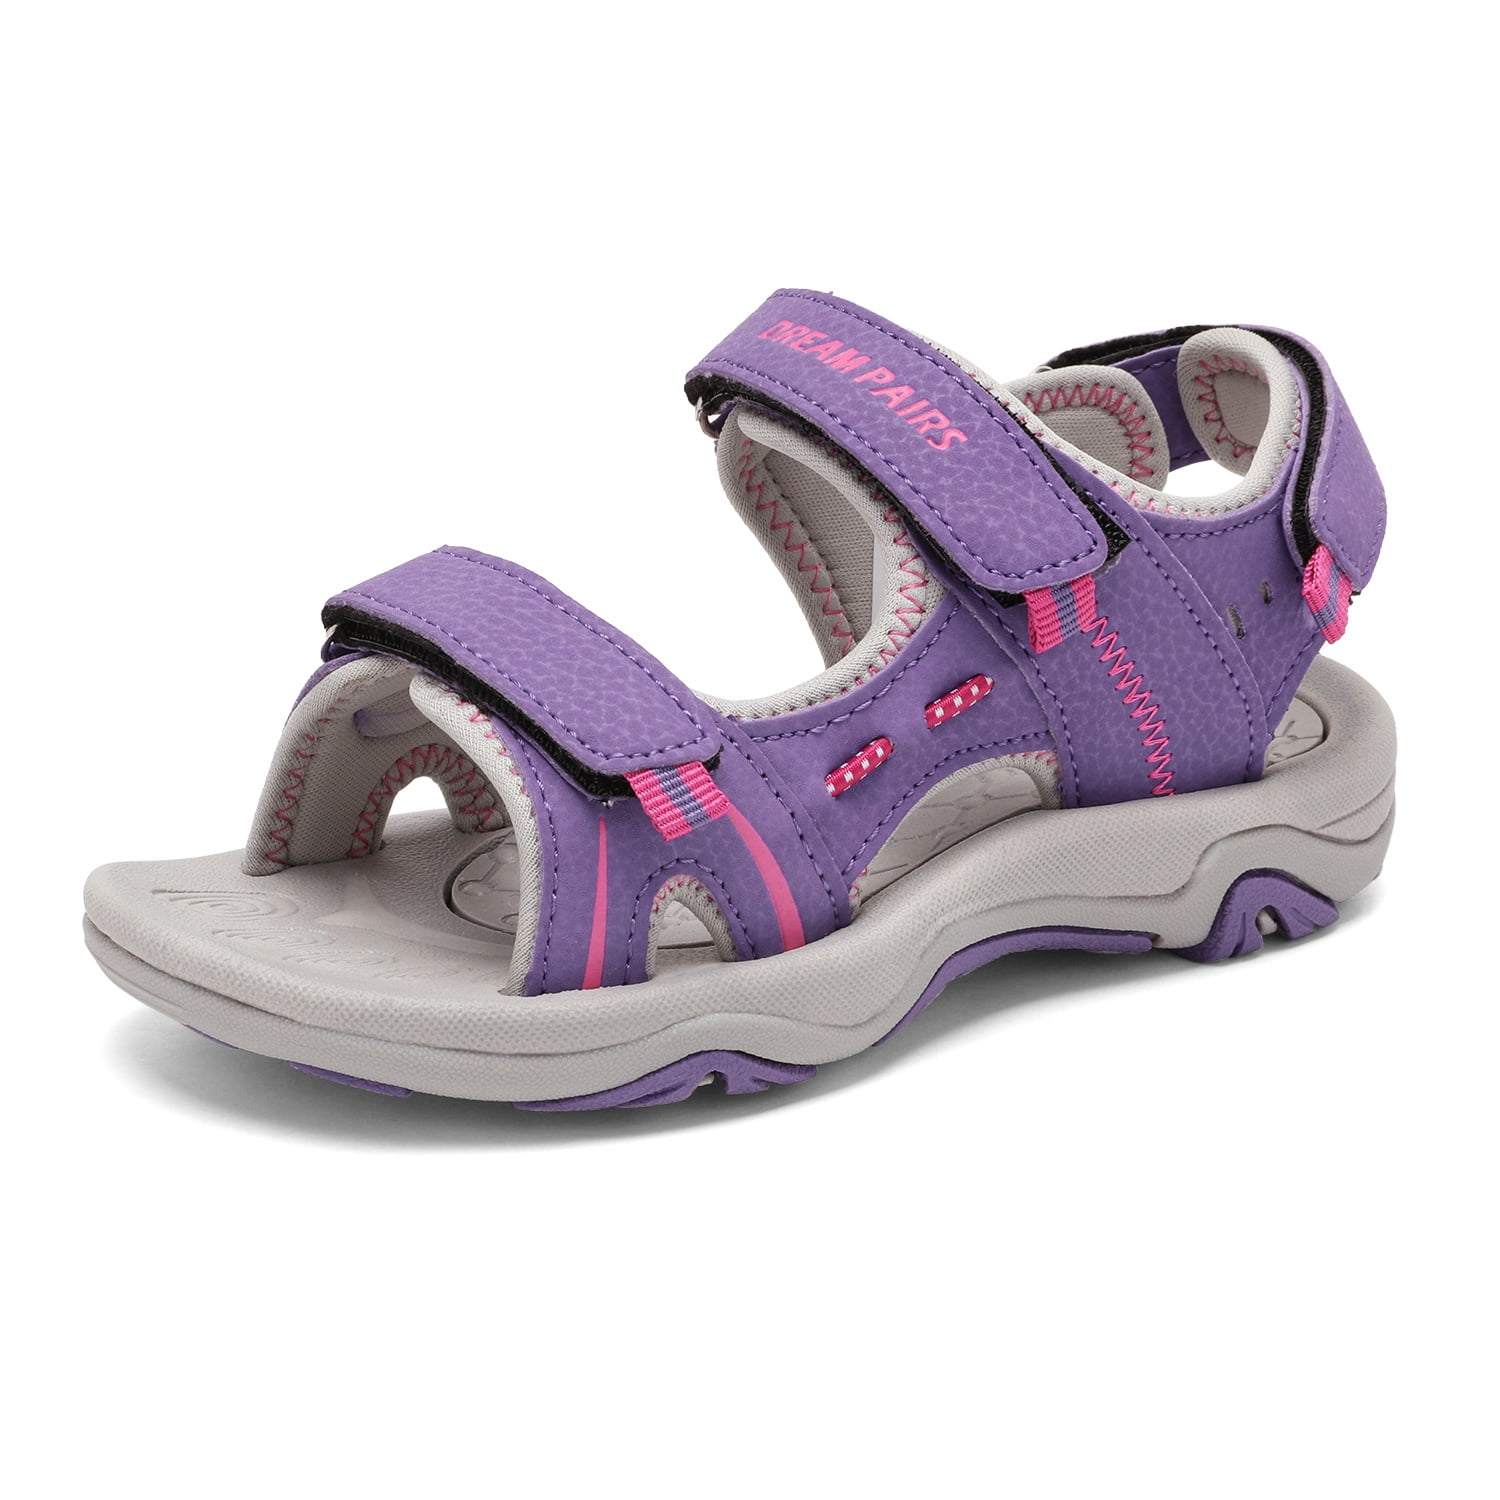 Toddler/Little Kid/Big Kid DREAM PAIRS Kids Adventurous Light-Weight Adjustable Straps Summer Sandals